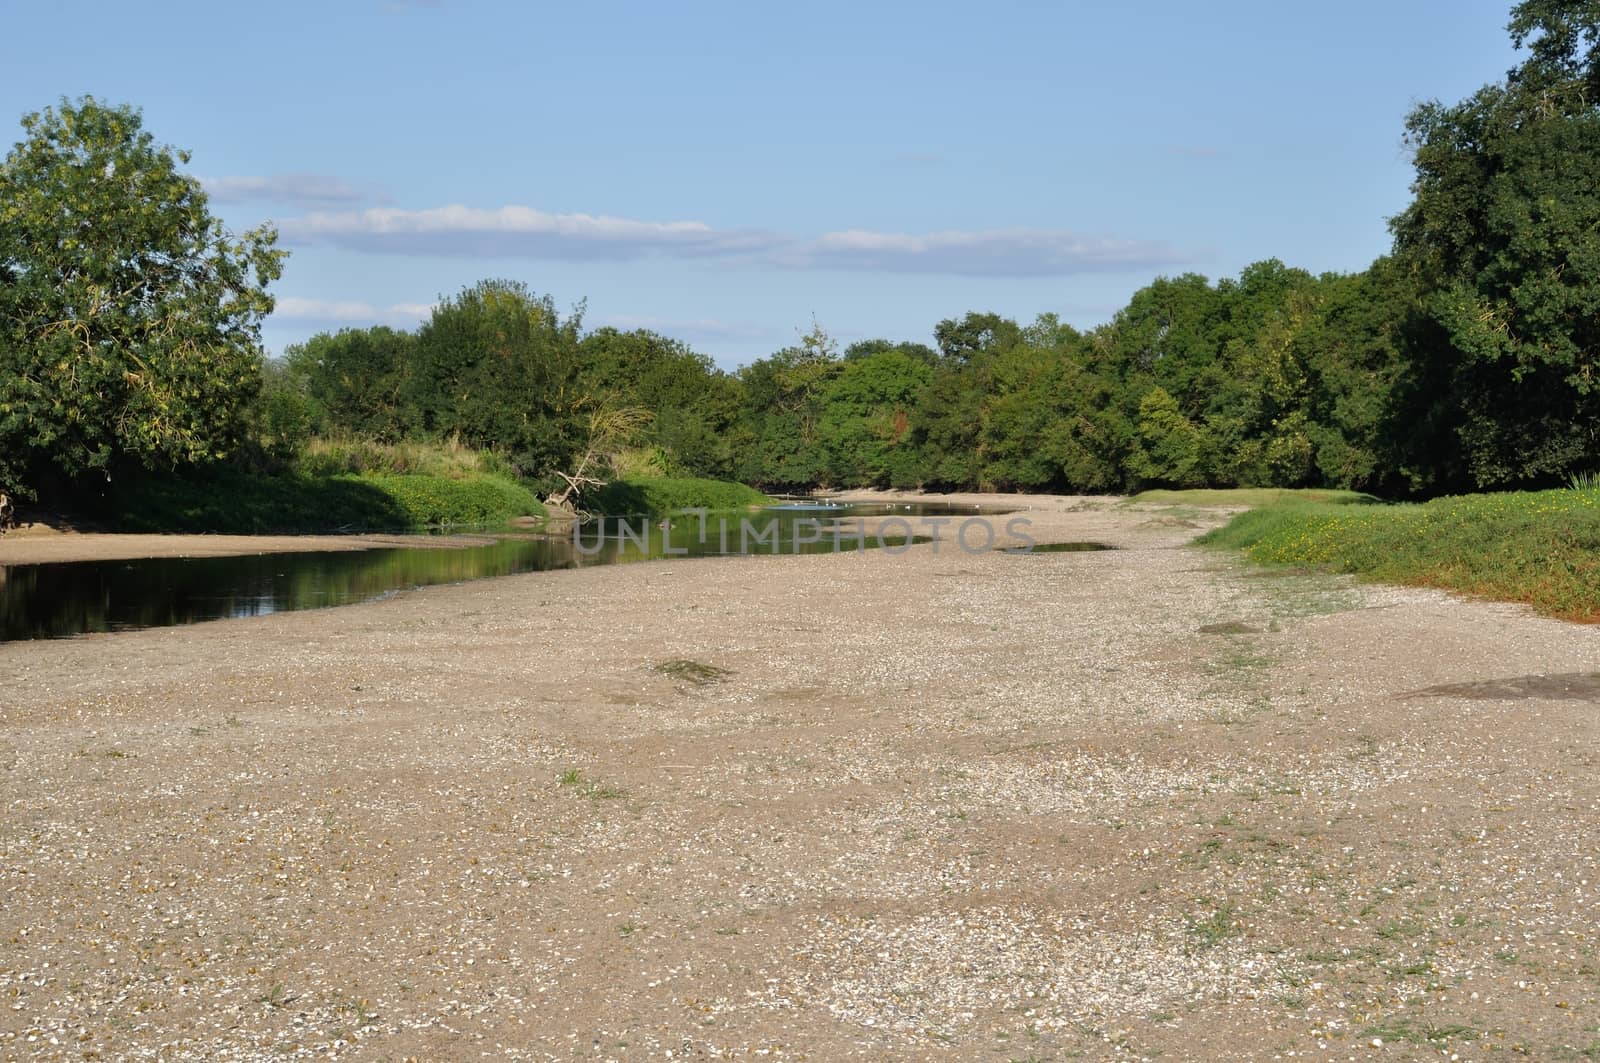 Louet river in Anjou